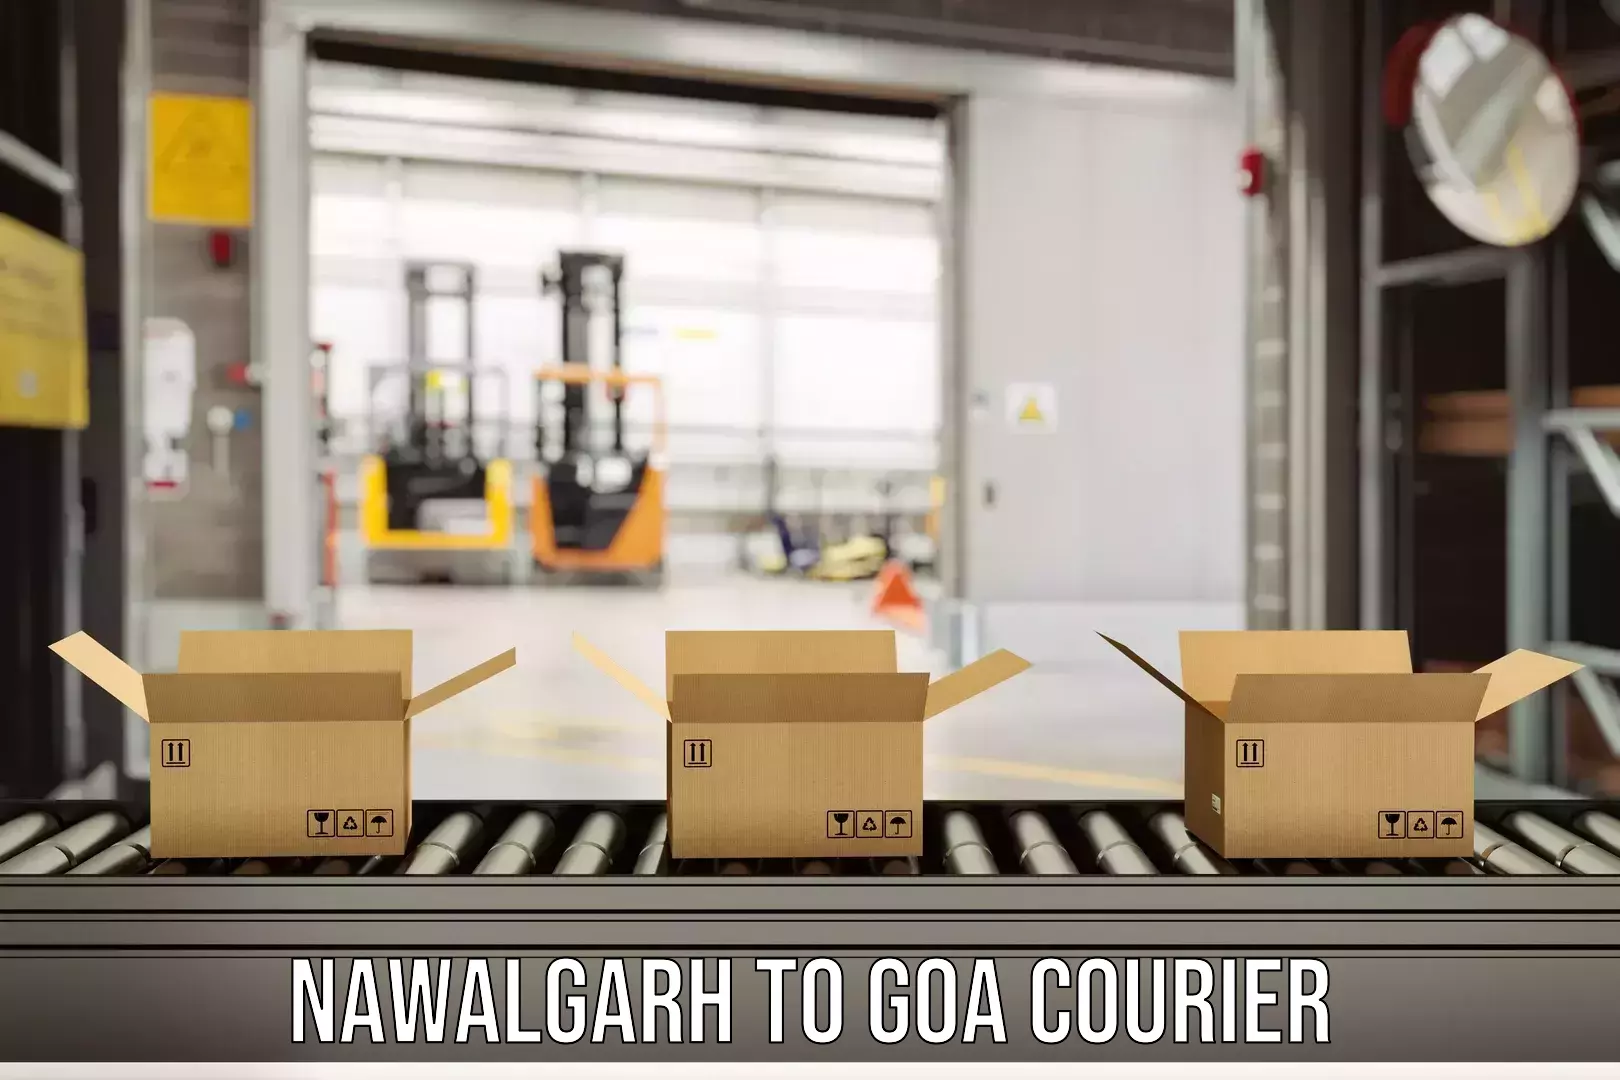 Express delivery capabilities Nawalgarh to Panaji